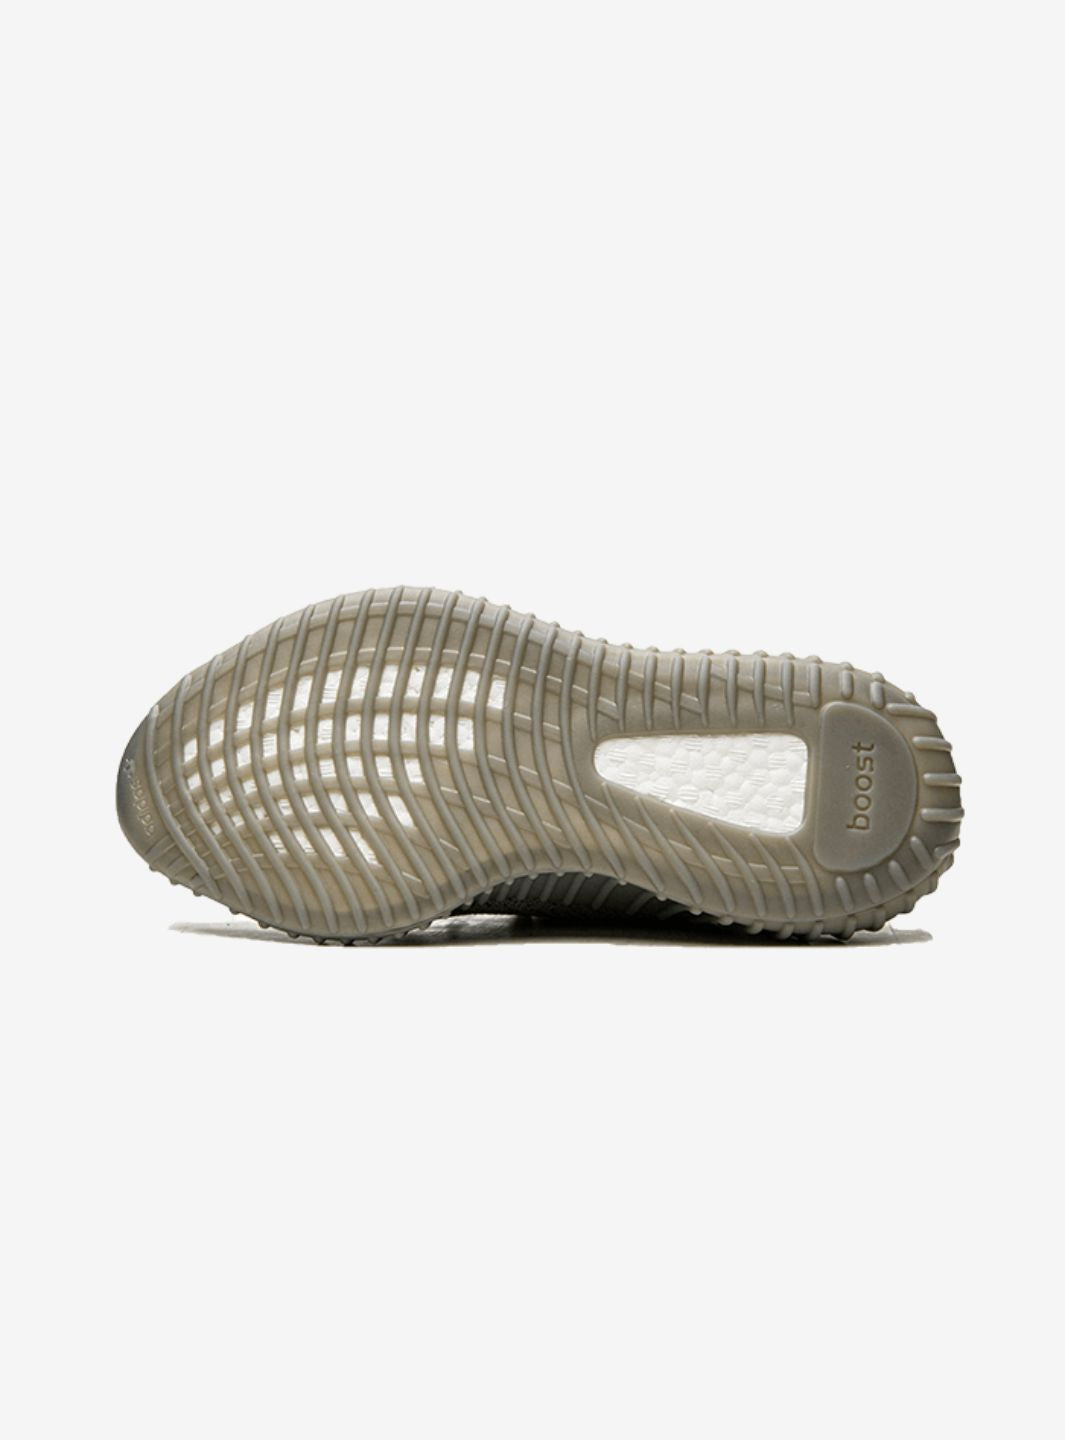 Adidas Yeezy Boost 350 V2 Granite - HQ2059 | ResellZone